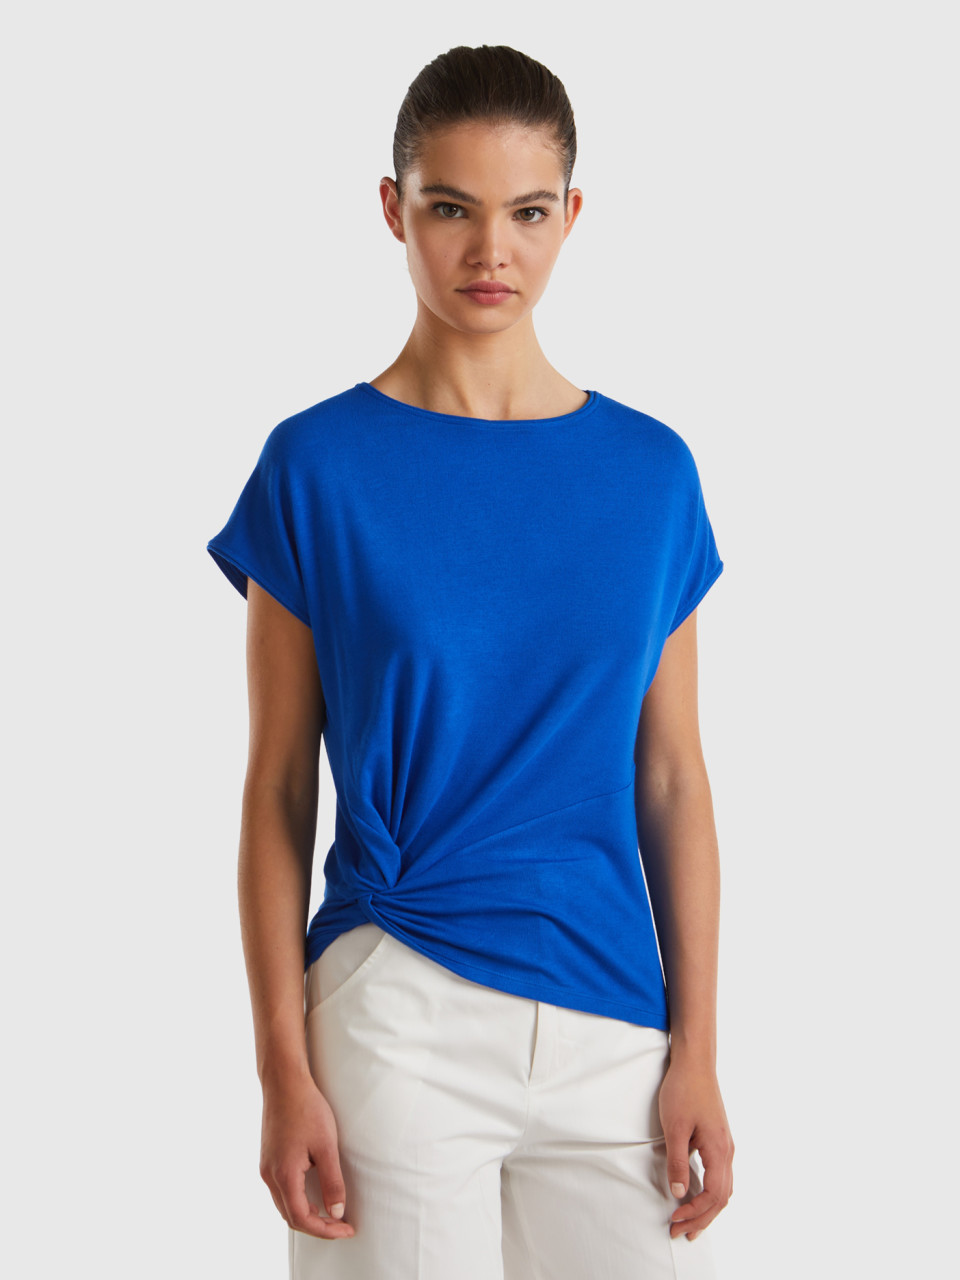 Benetton, Flowy T-shirt With Knot, Bright Blue, Women